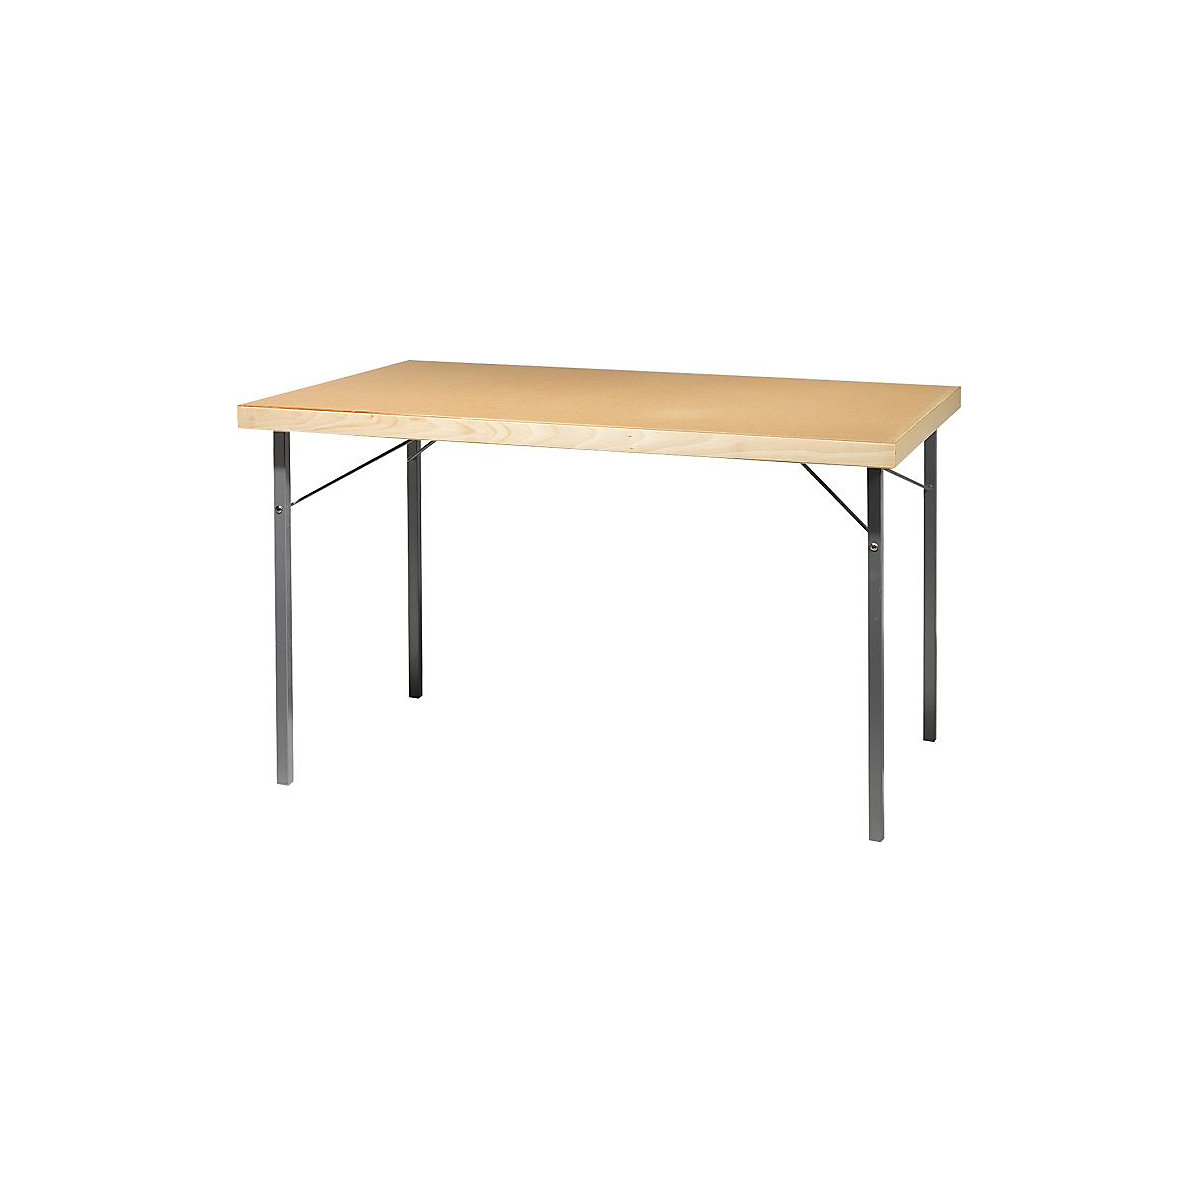 Inklapbare tafel, frame van metaal, aluminiumzilver, b x d = 1200 x 800 mm, bovenblad van hout-1